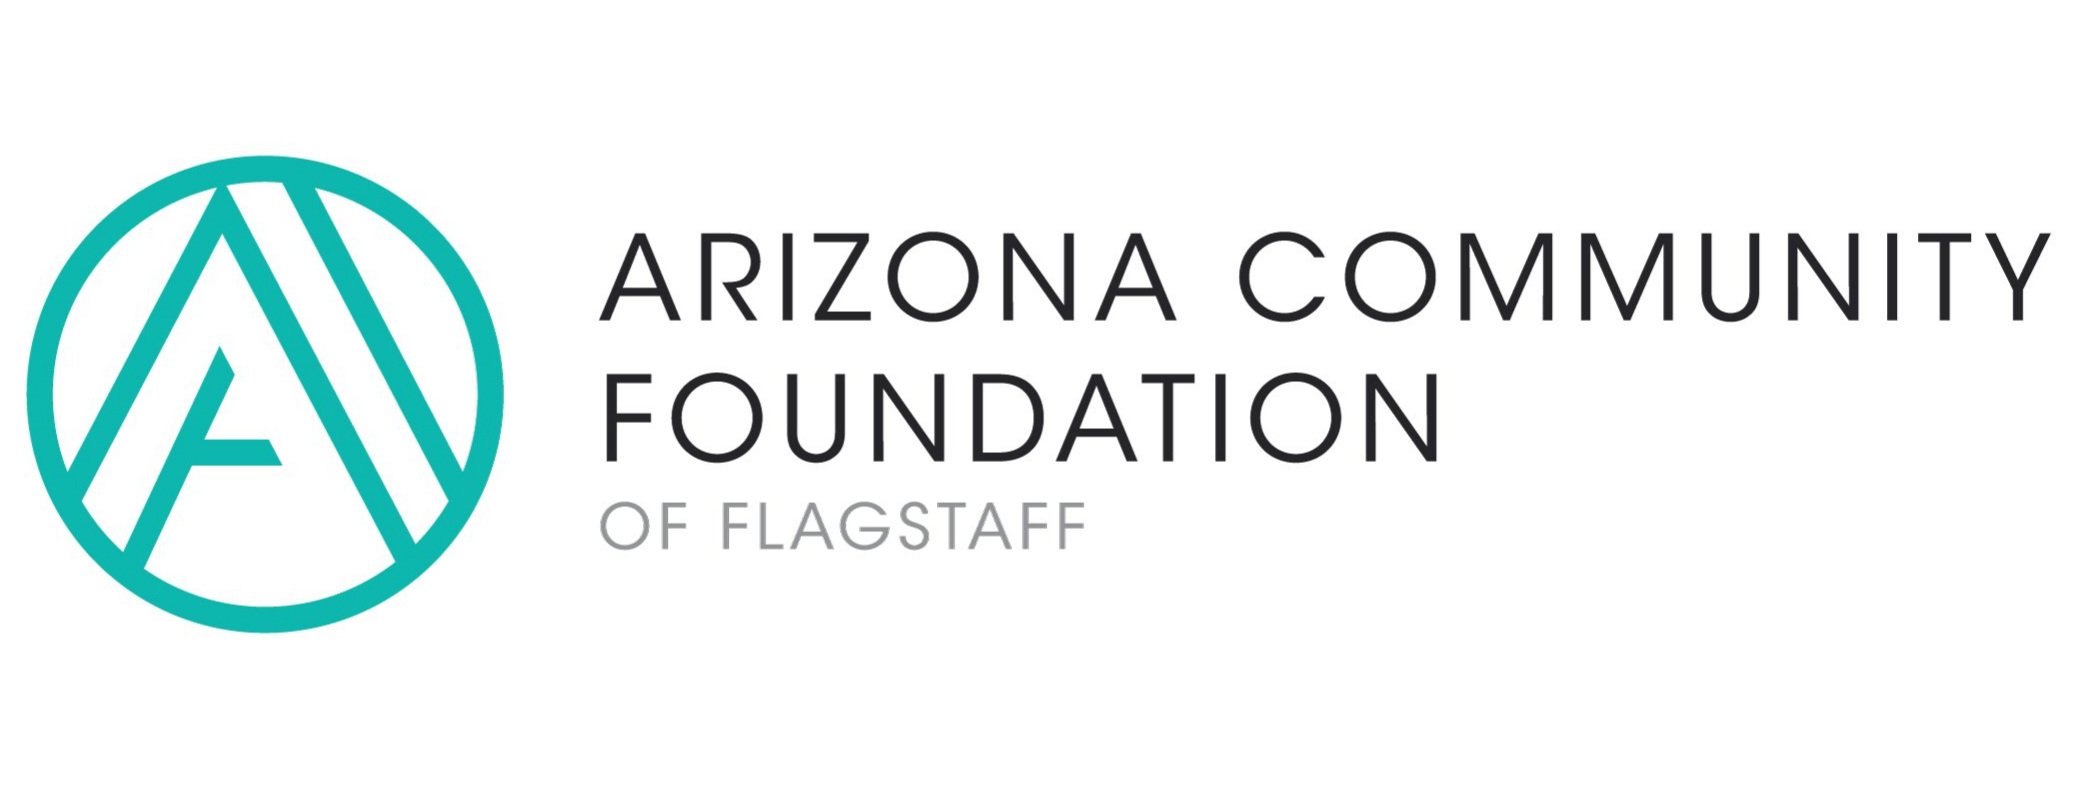 Arizona Community Foundation of Flagstaff